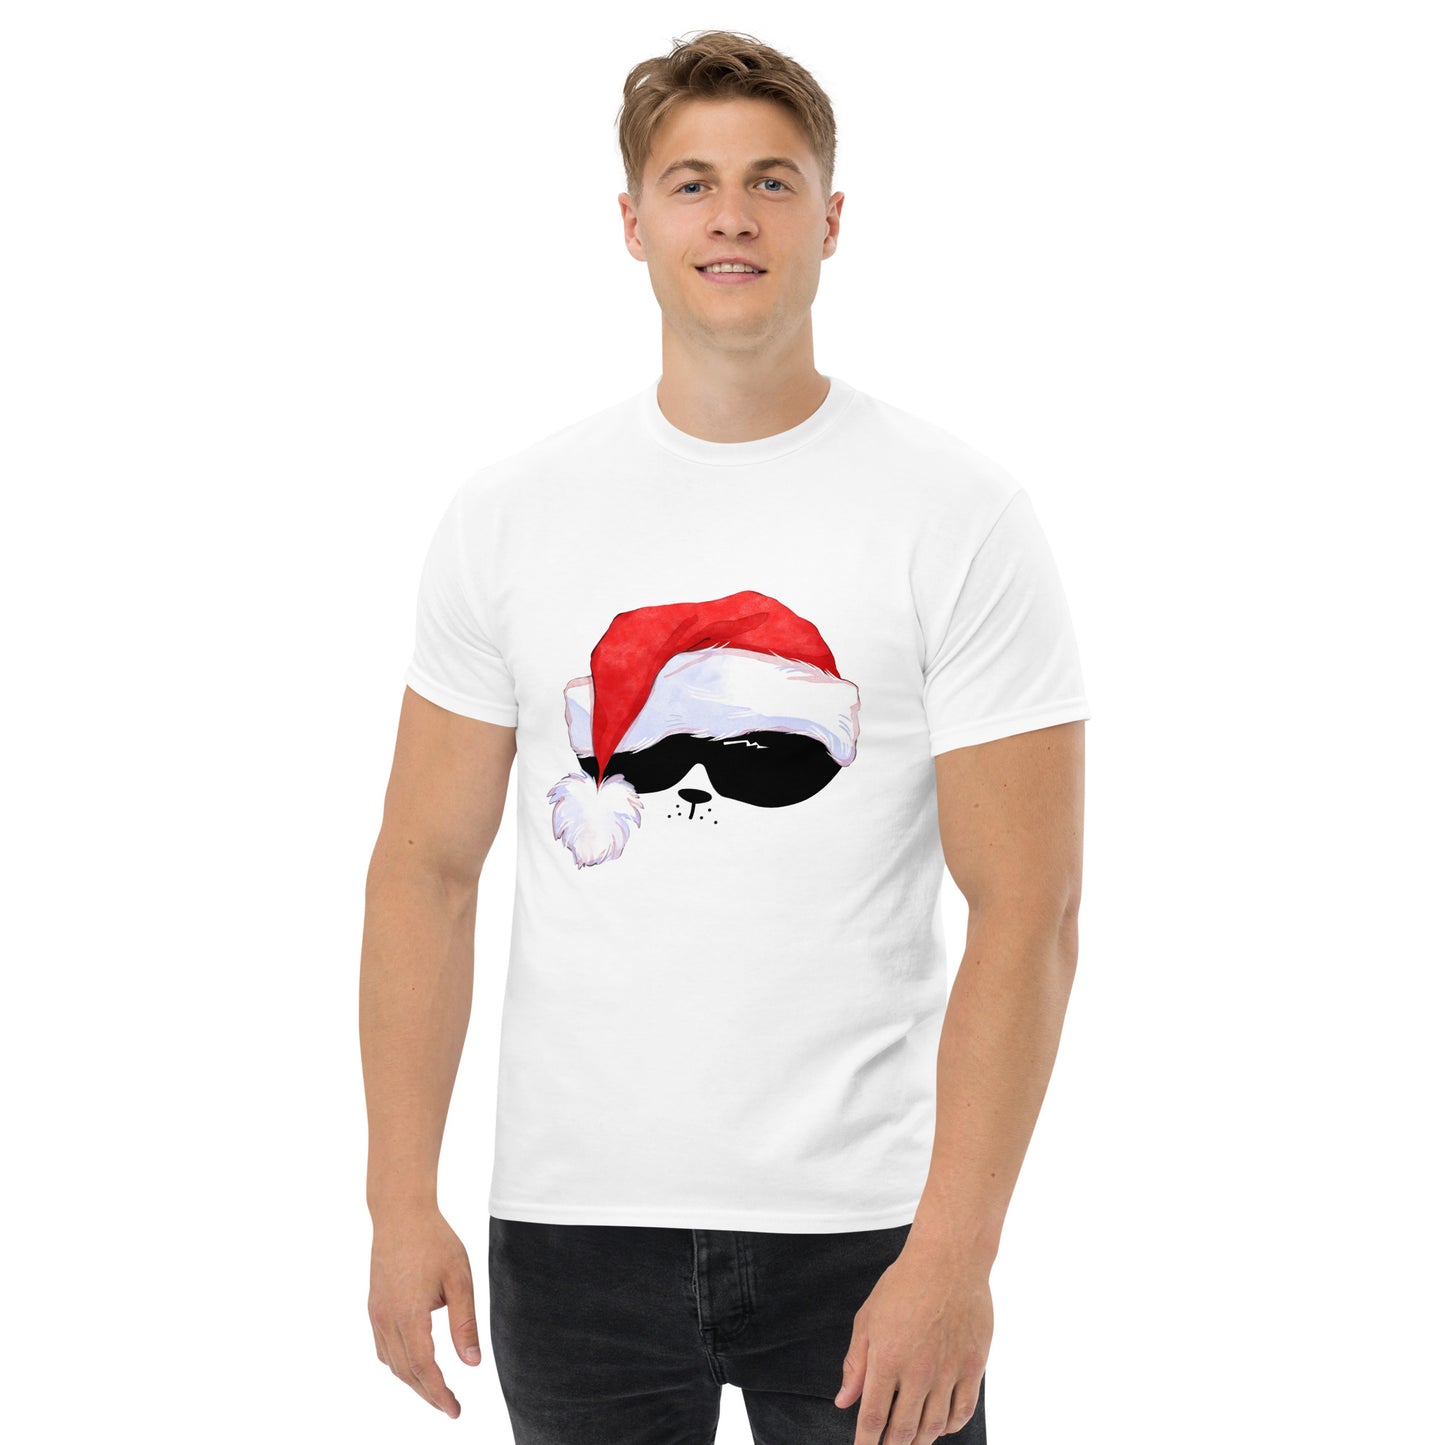 Men's T-shirt "Christmas"